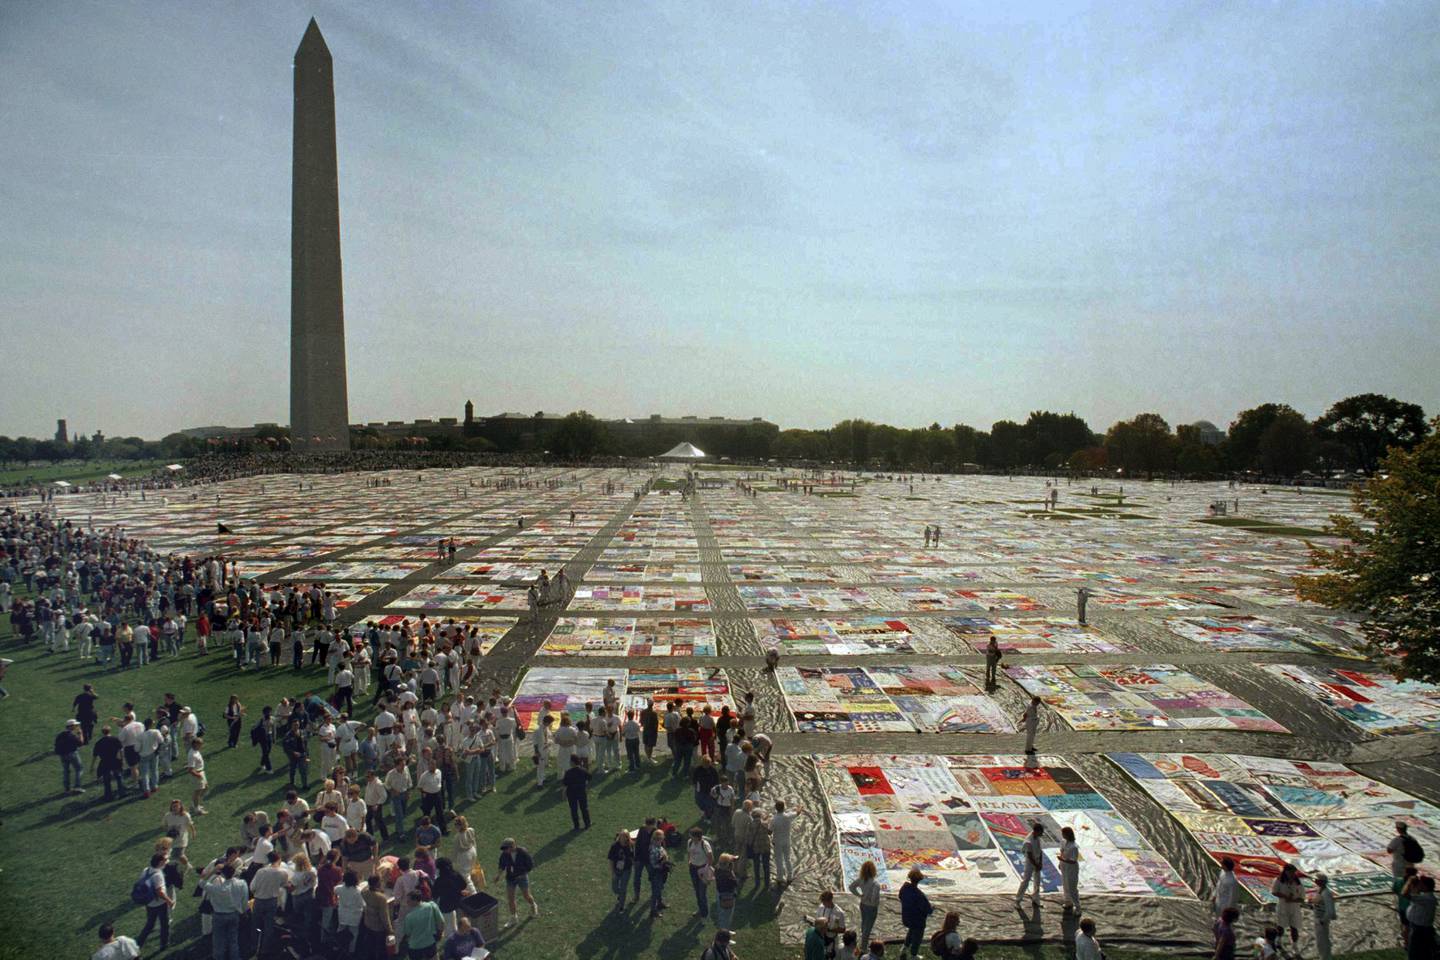 AIDS Memorial Quilt, Washington Monument